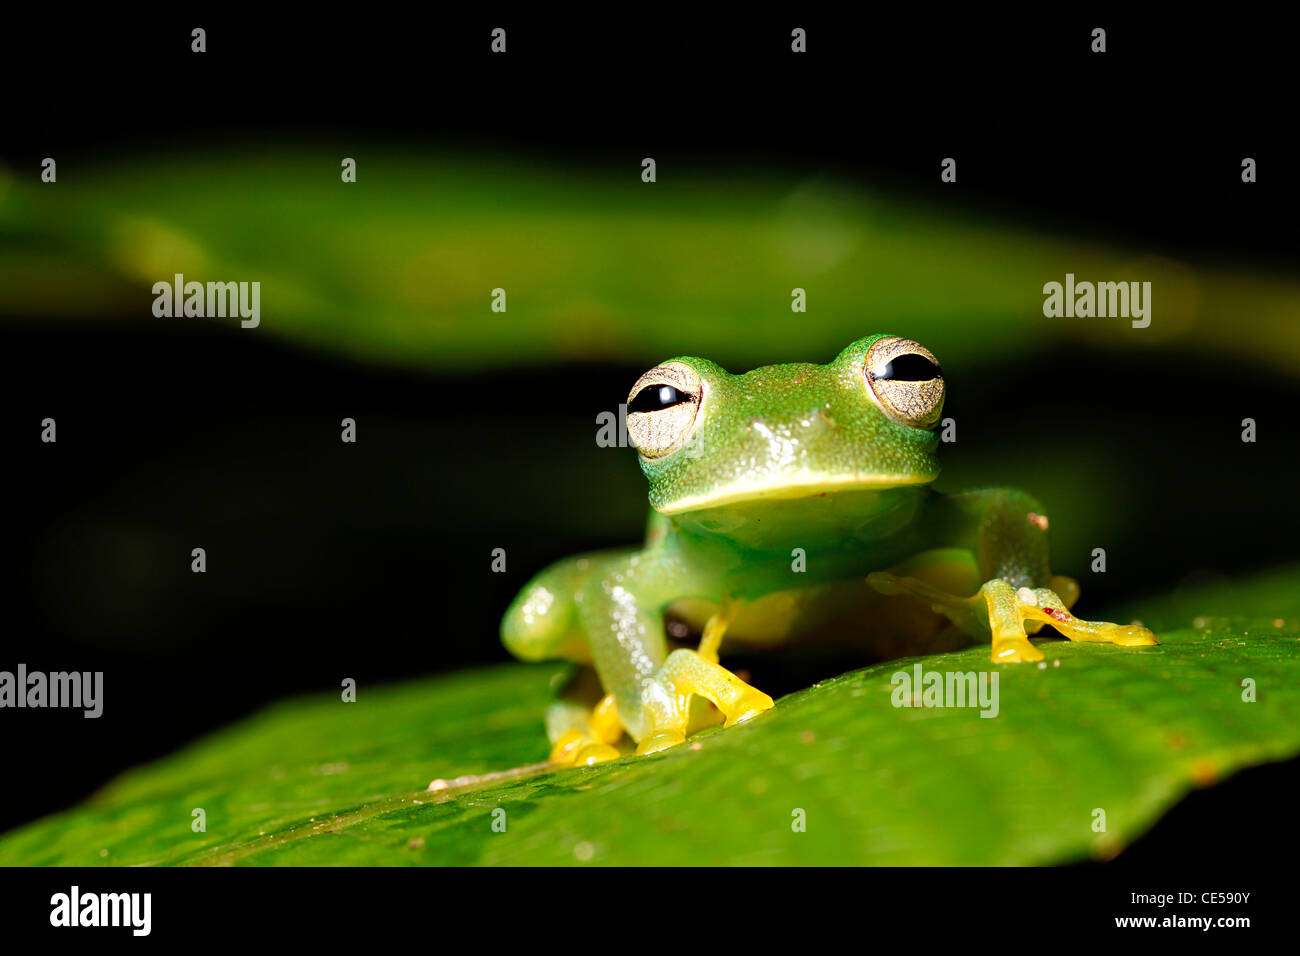 amphibian frog green rainforest jungle tropical copy space Stock Photo